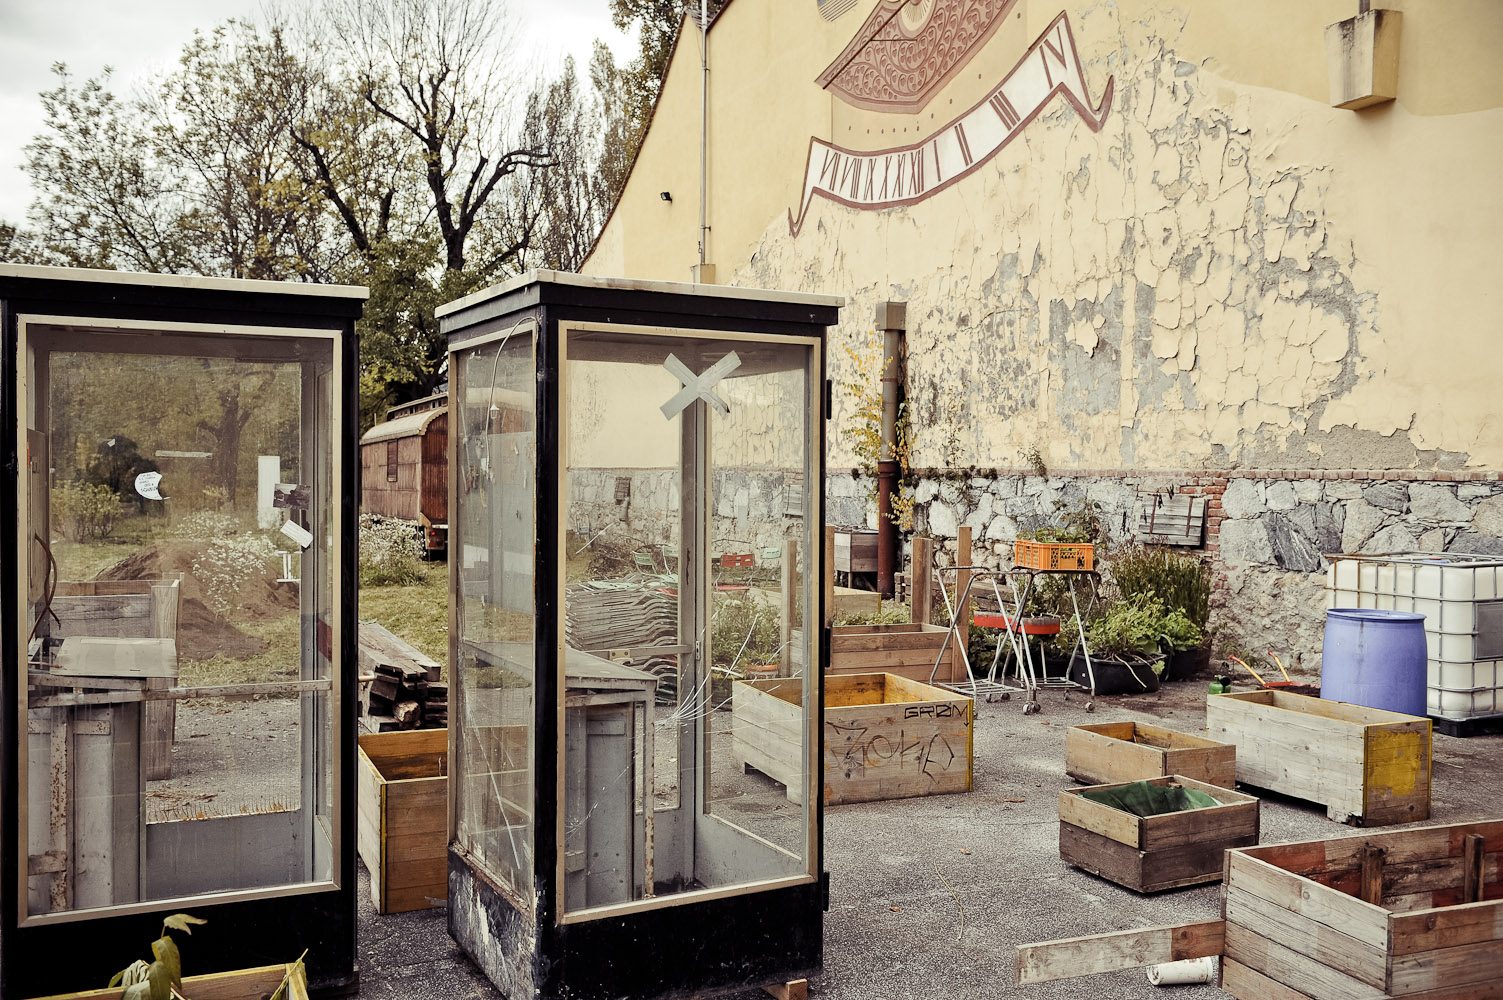 Reininghausgründe, Urban Gardening Project